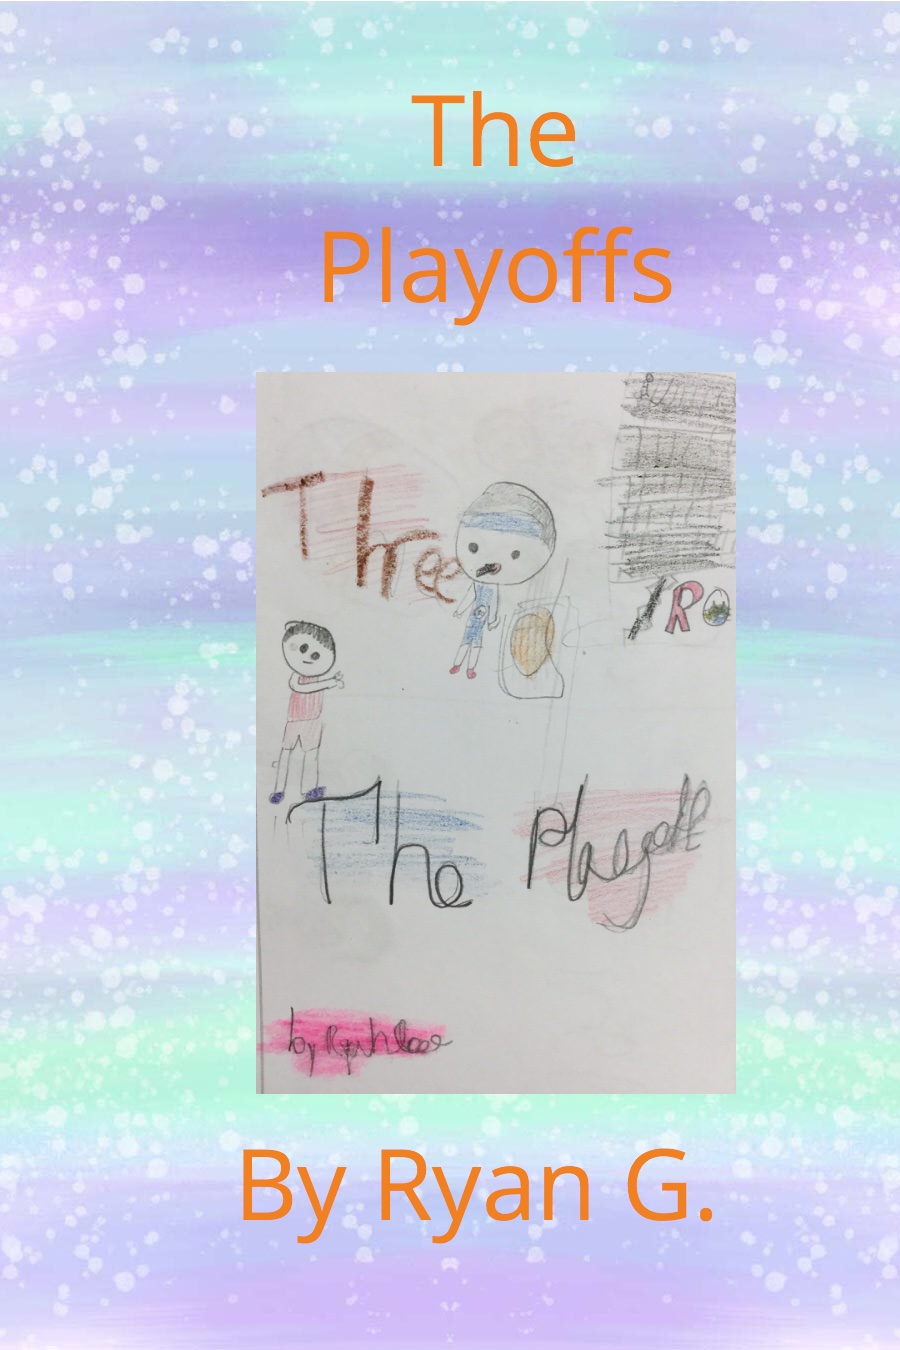 The Playoffs by Ryan G